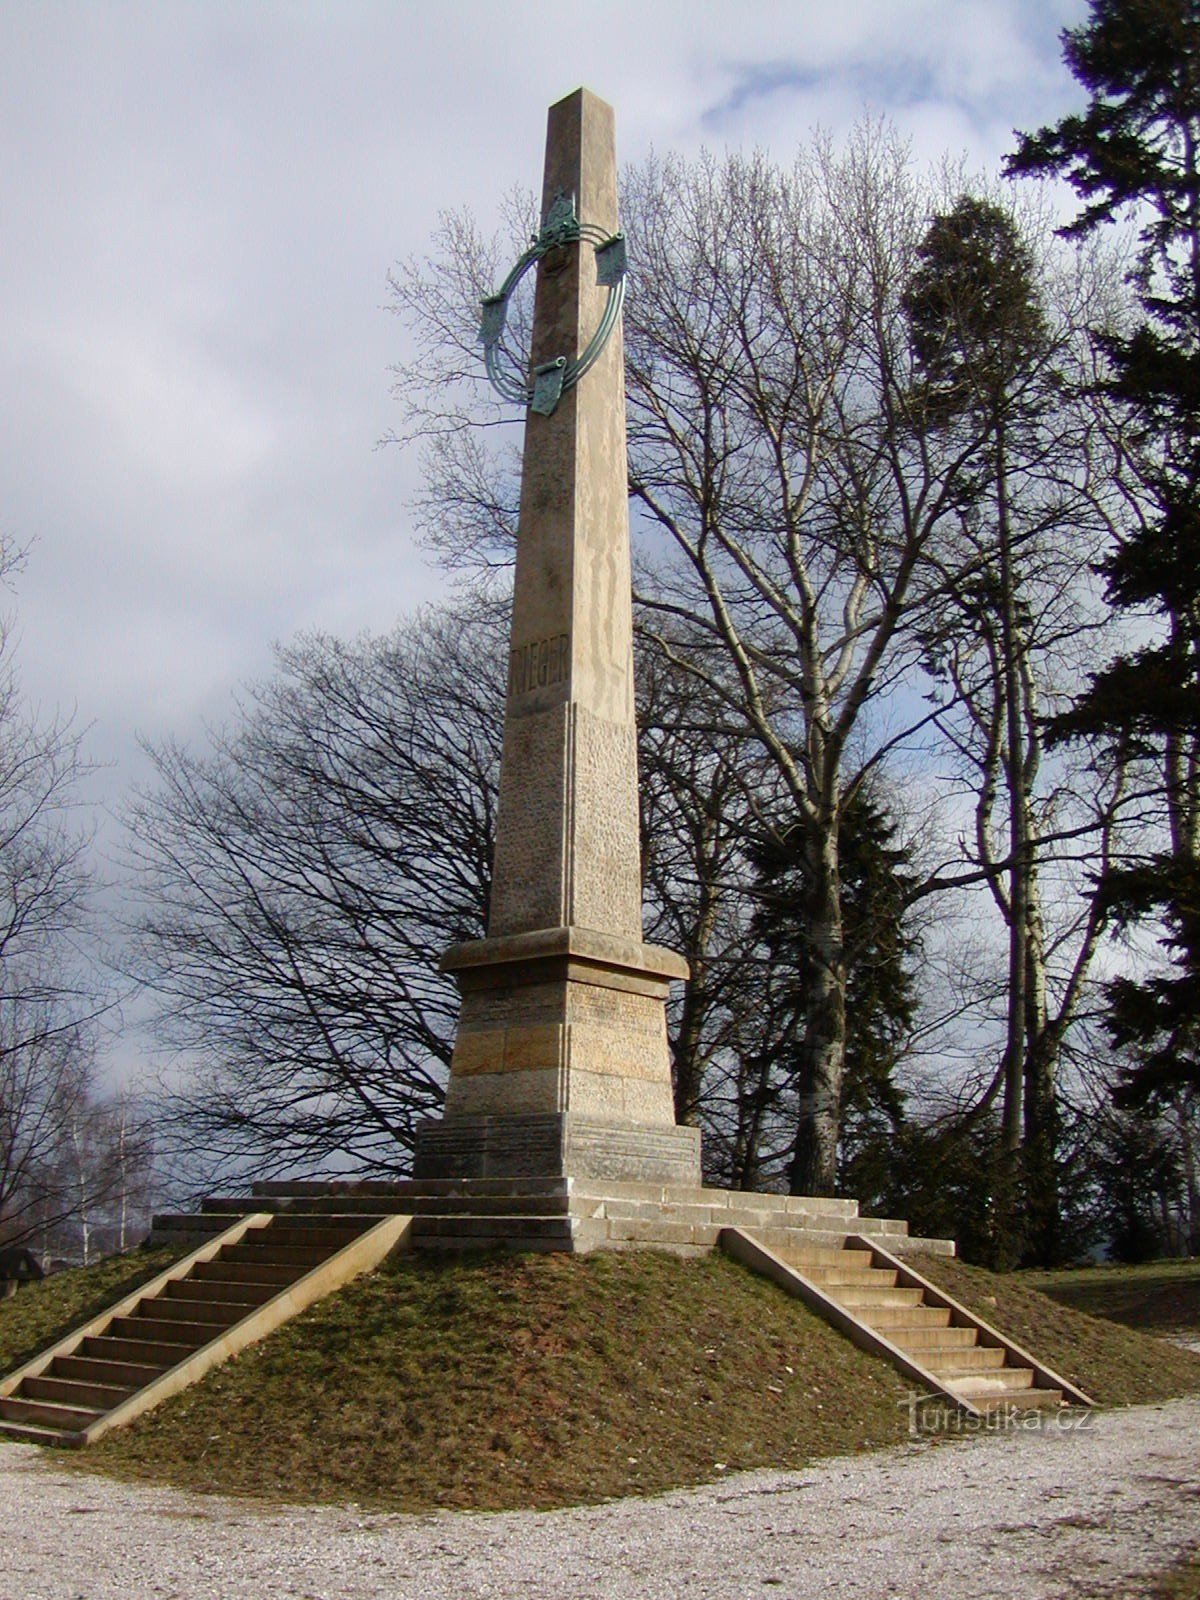 Gothard - Riegerin obeliski